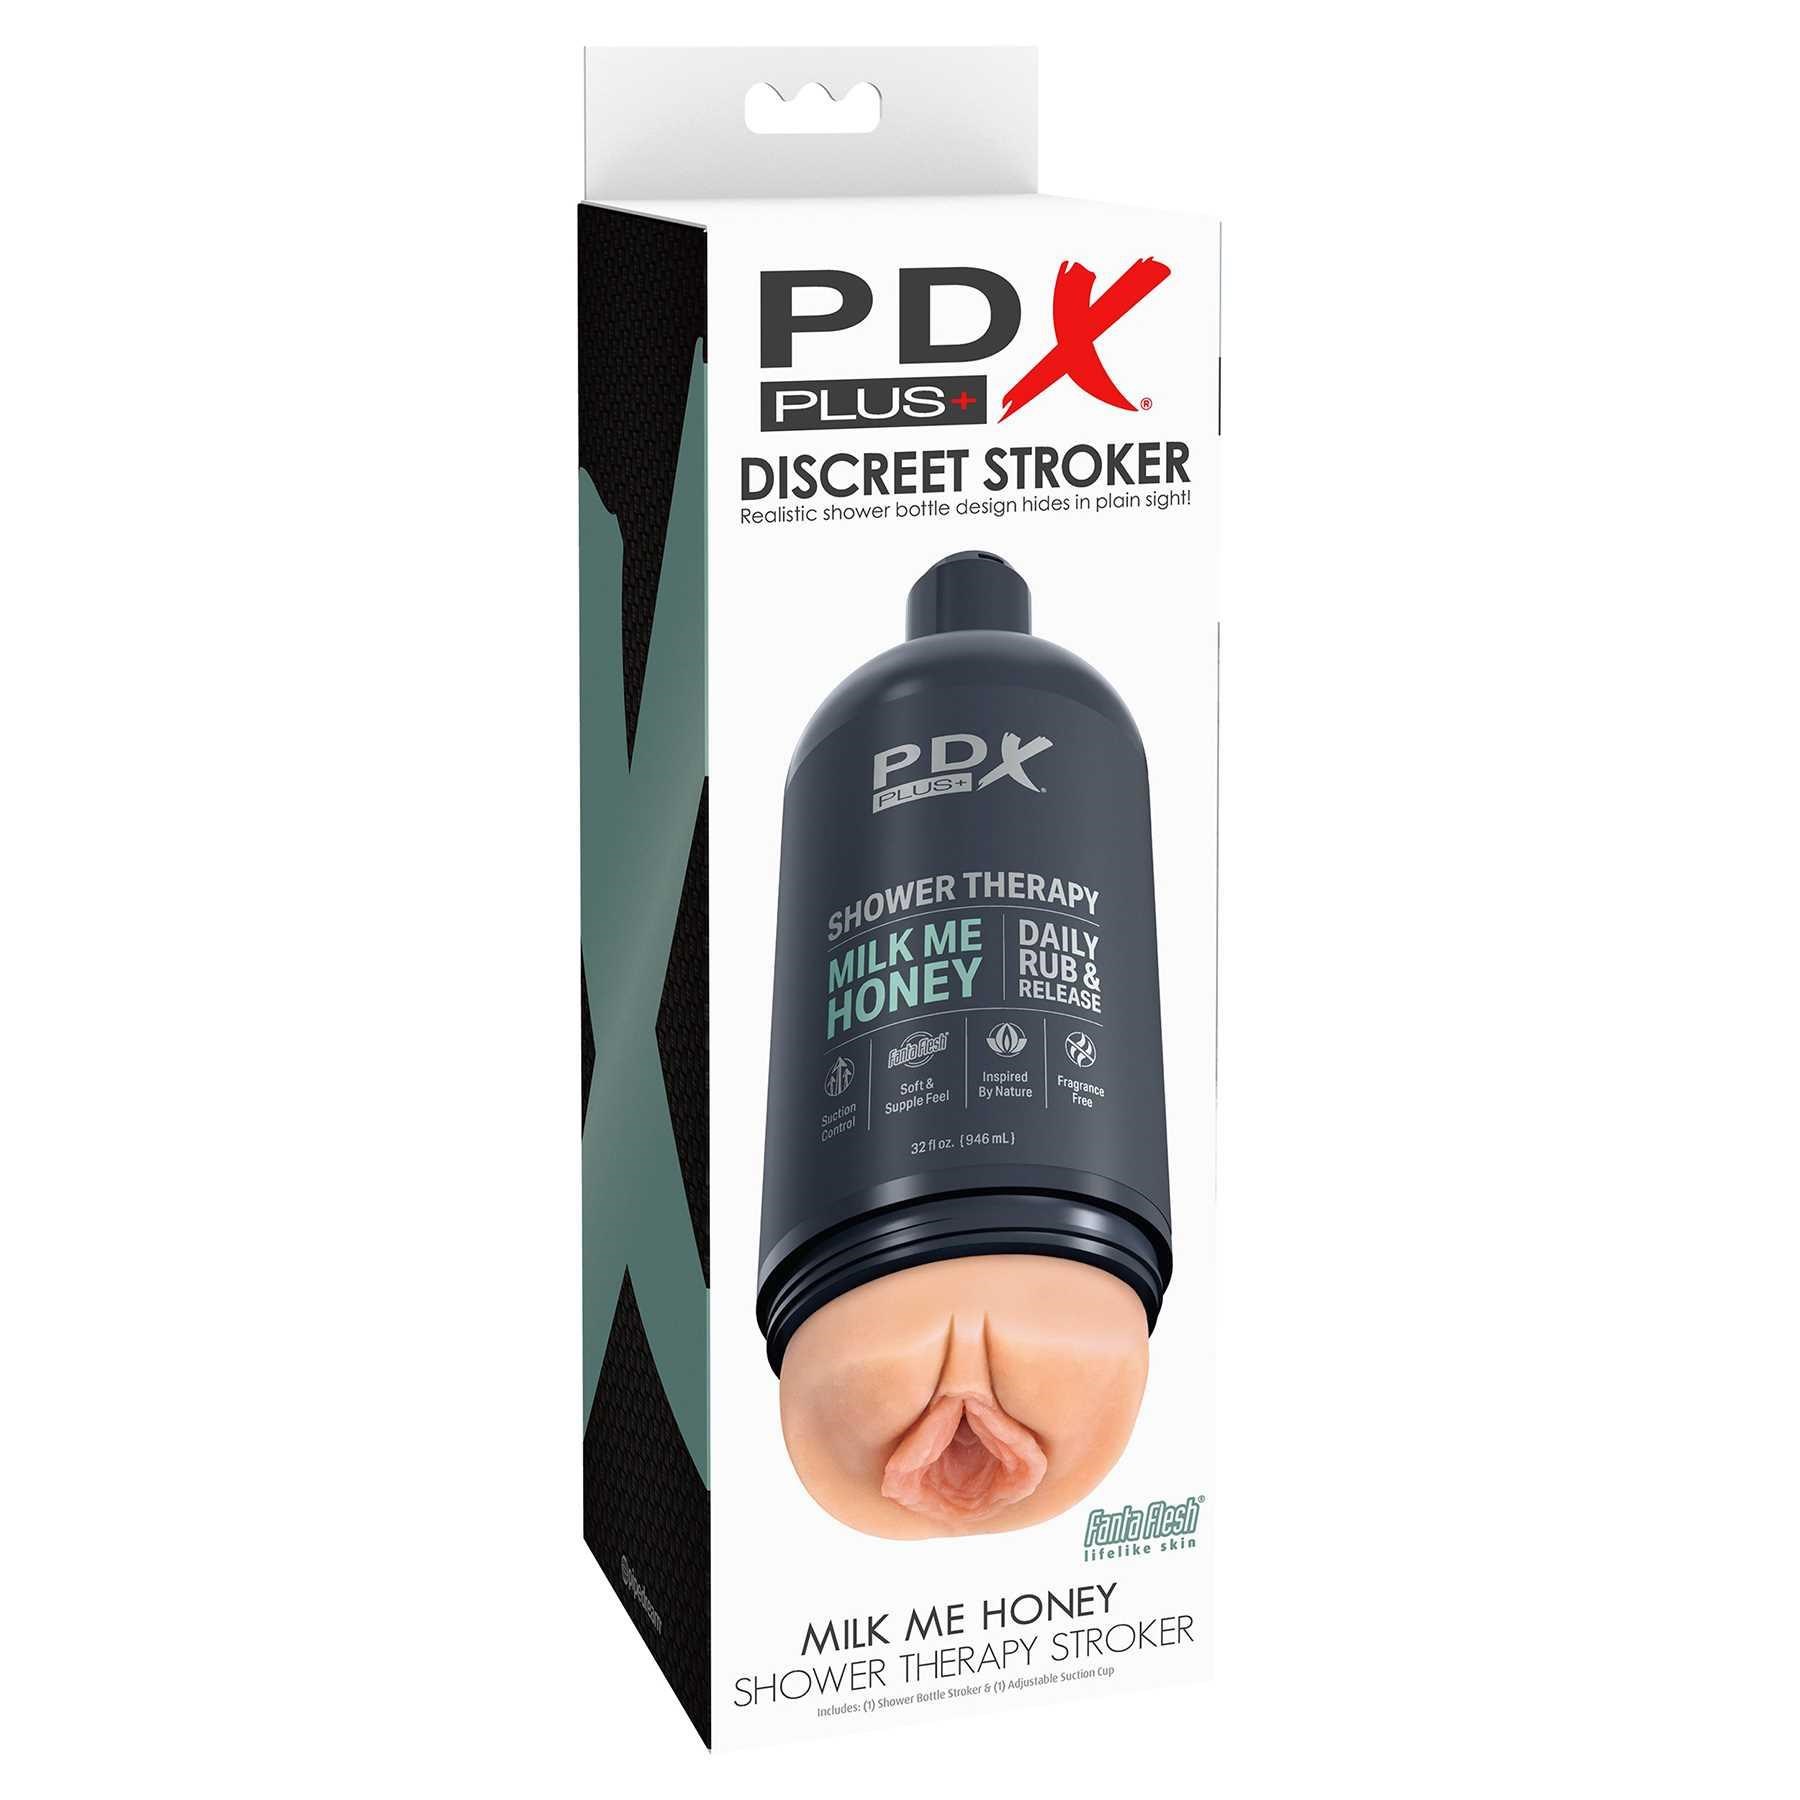 PDX Plus Shower Therapy Milk Me Honey Discreet Stroker male masturbator packaging